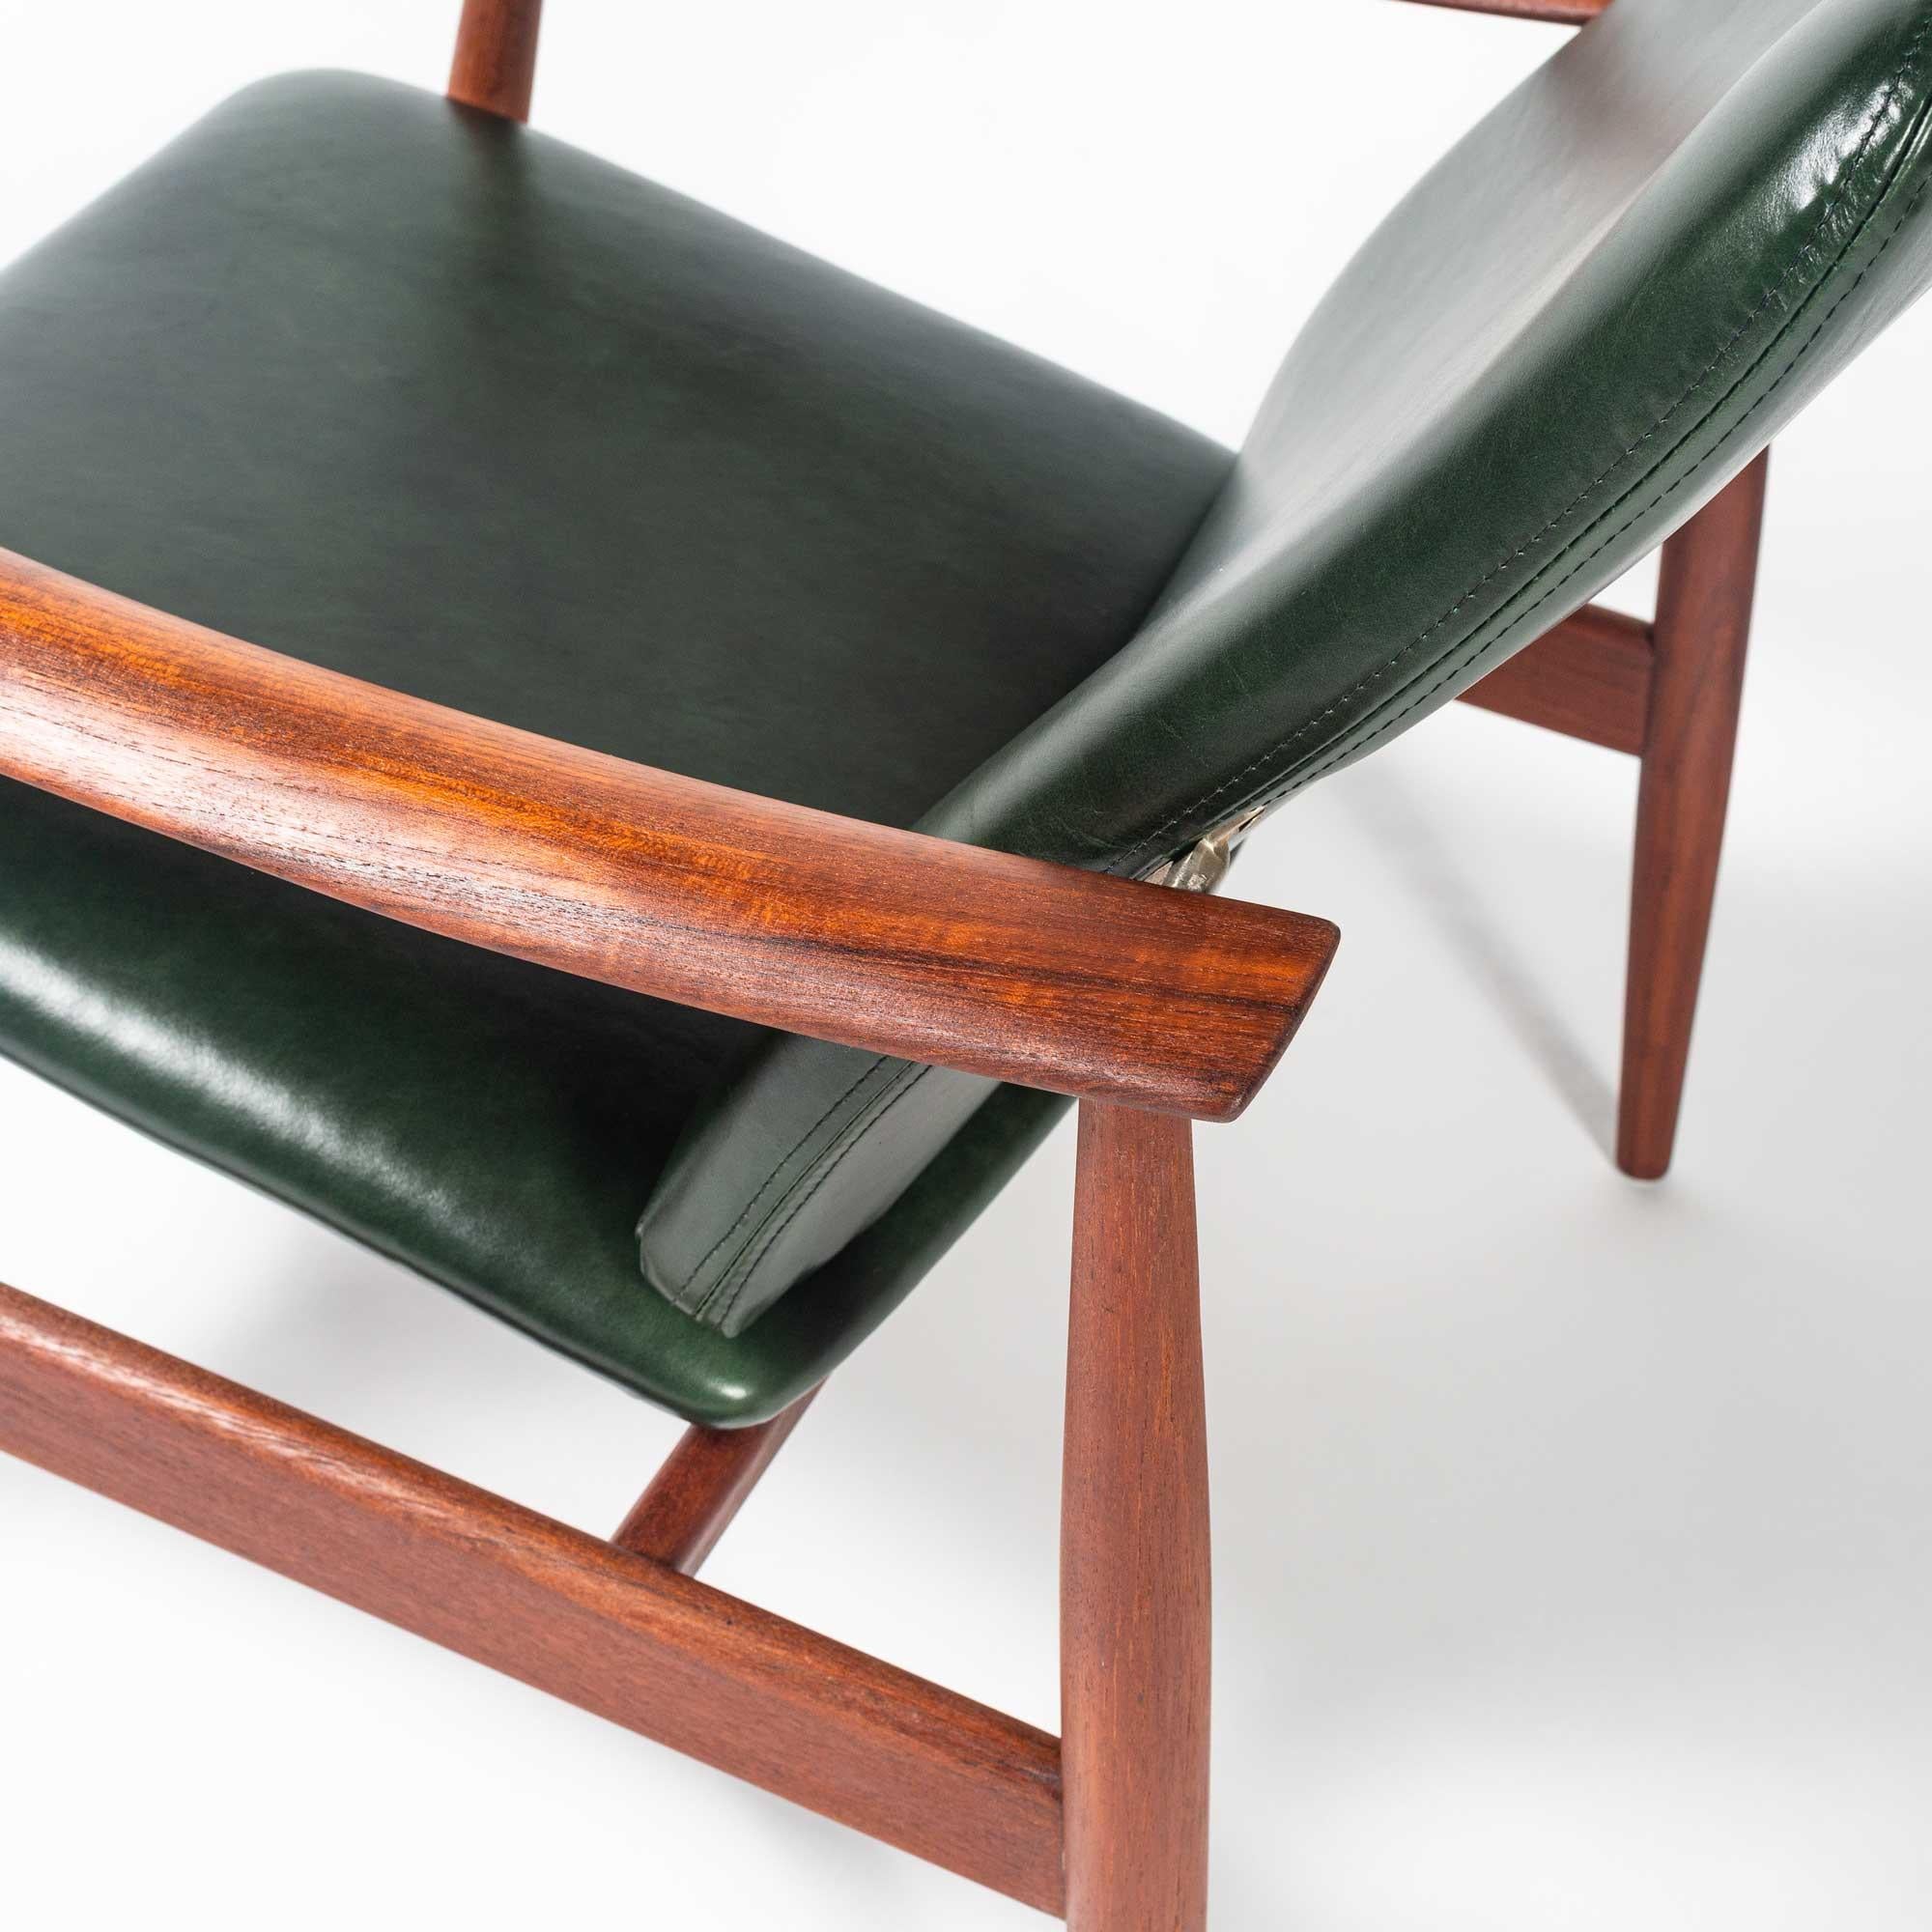 Finn Juhl For Frances & Son Easy Chair FD138 in Teak and Green Leather 1